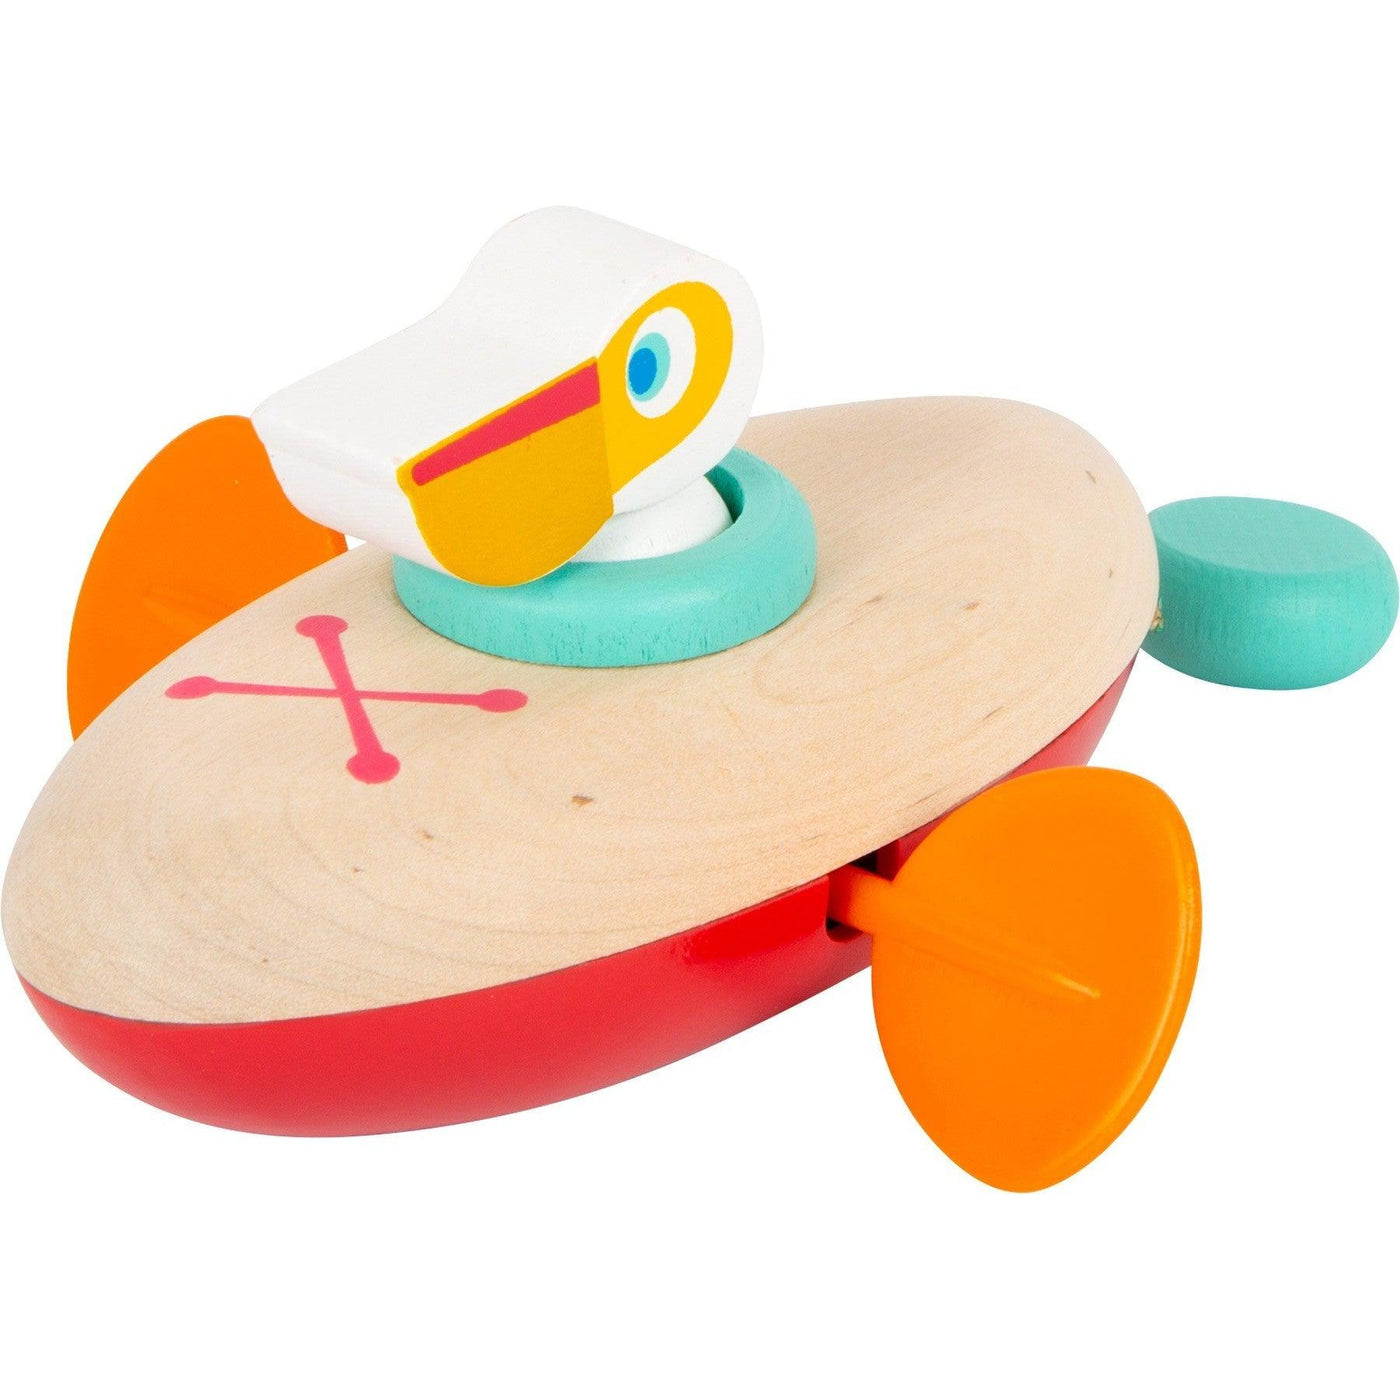 Water Toy - Wind-Up Canoe Pelican